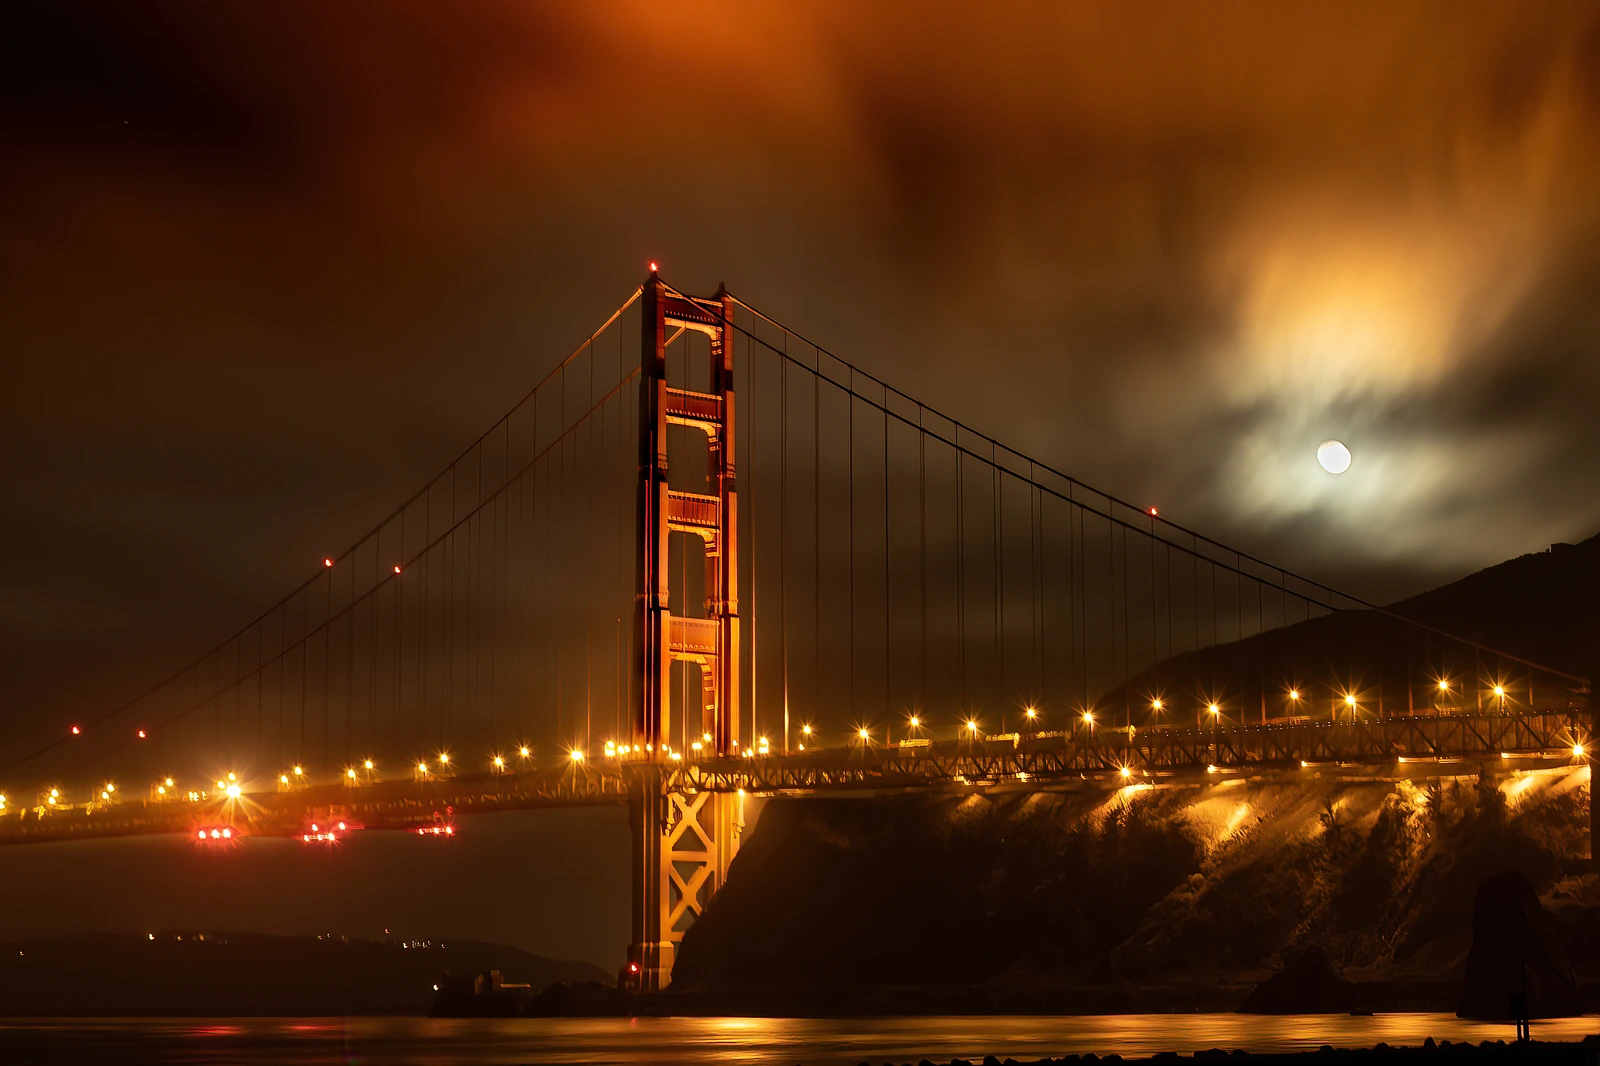 Golden Gate Bridge, fog and full moon 2. Moon setting at 4am.